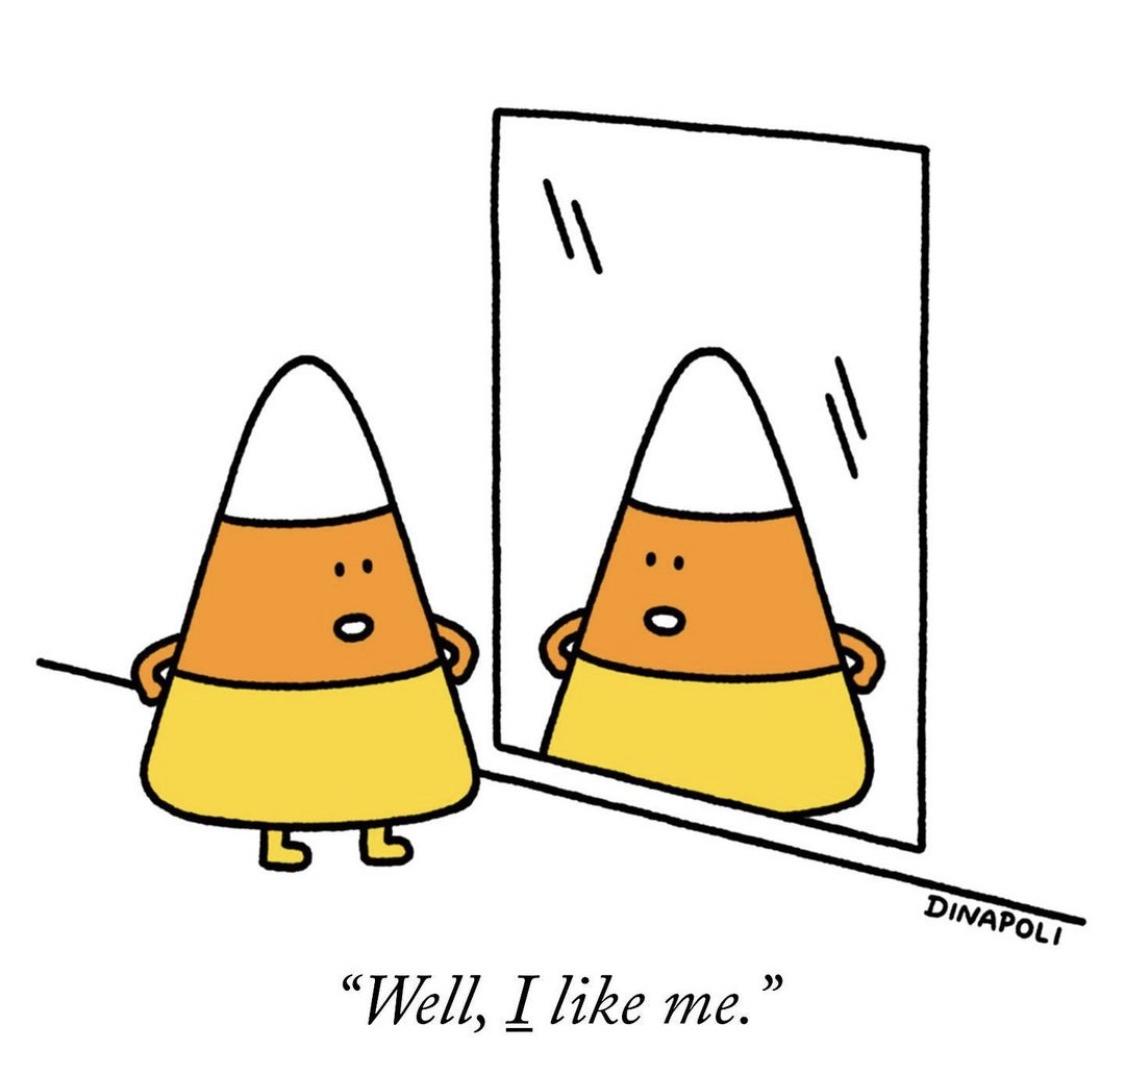 daily dose of memes and pics - candy corn cartoon i like me - "Well, I me." Dinapoli